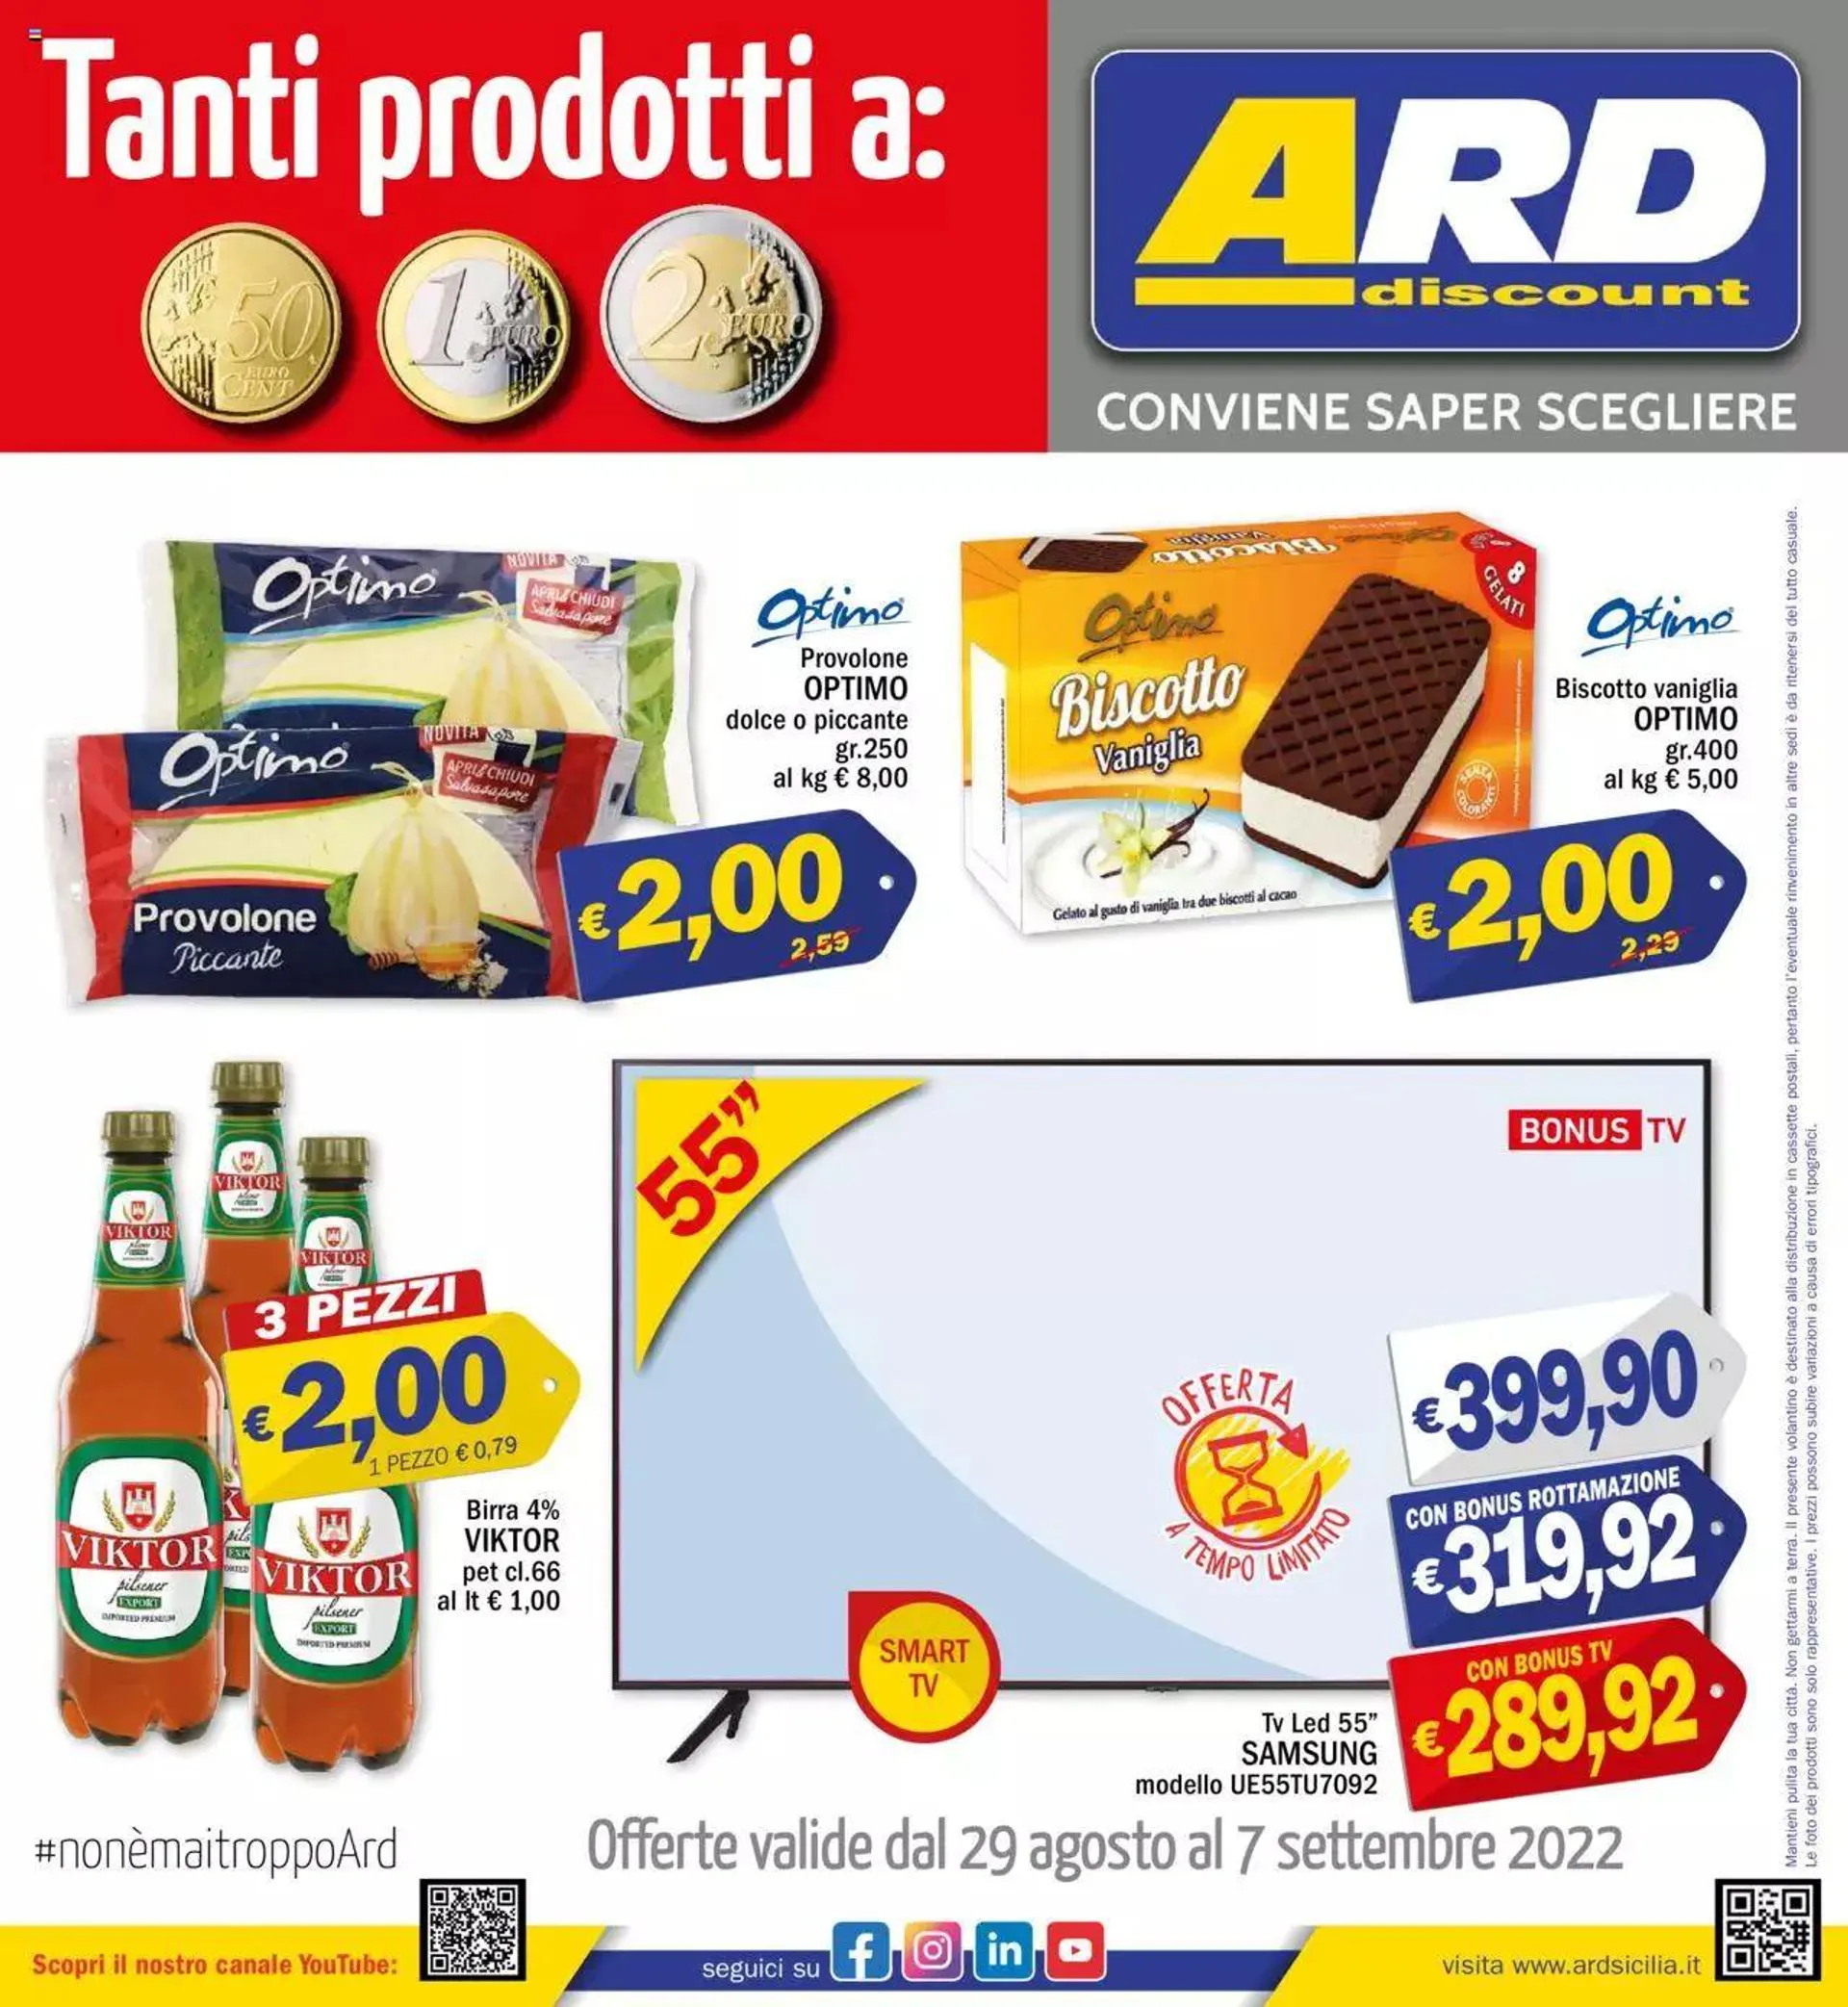 ARD Discount - Volantino - 23